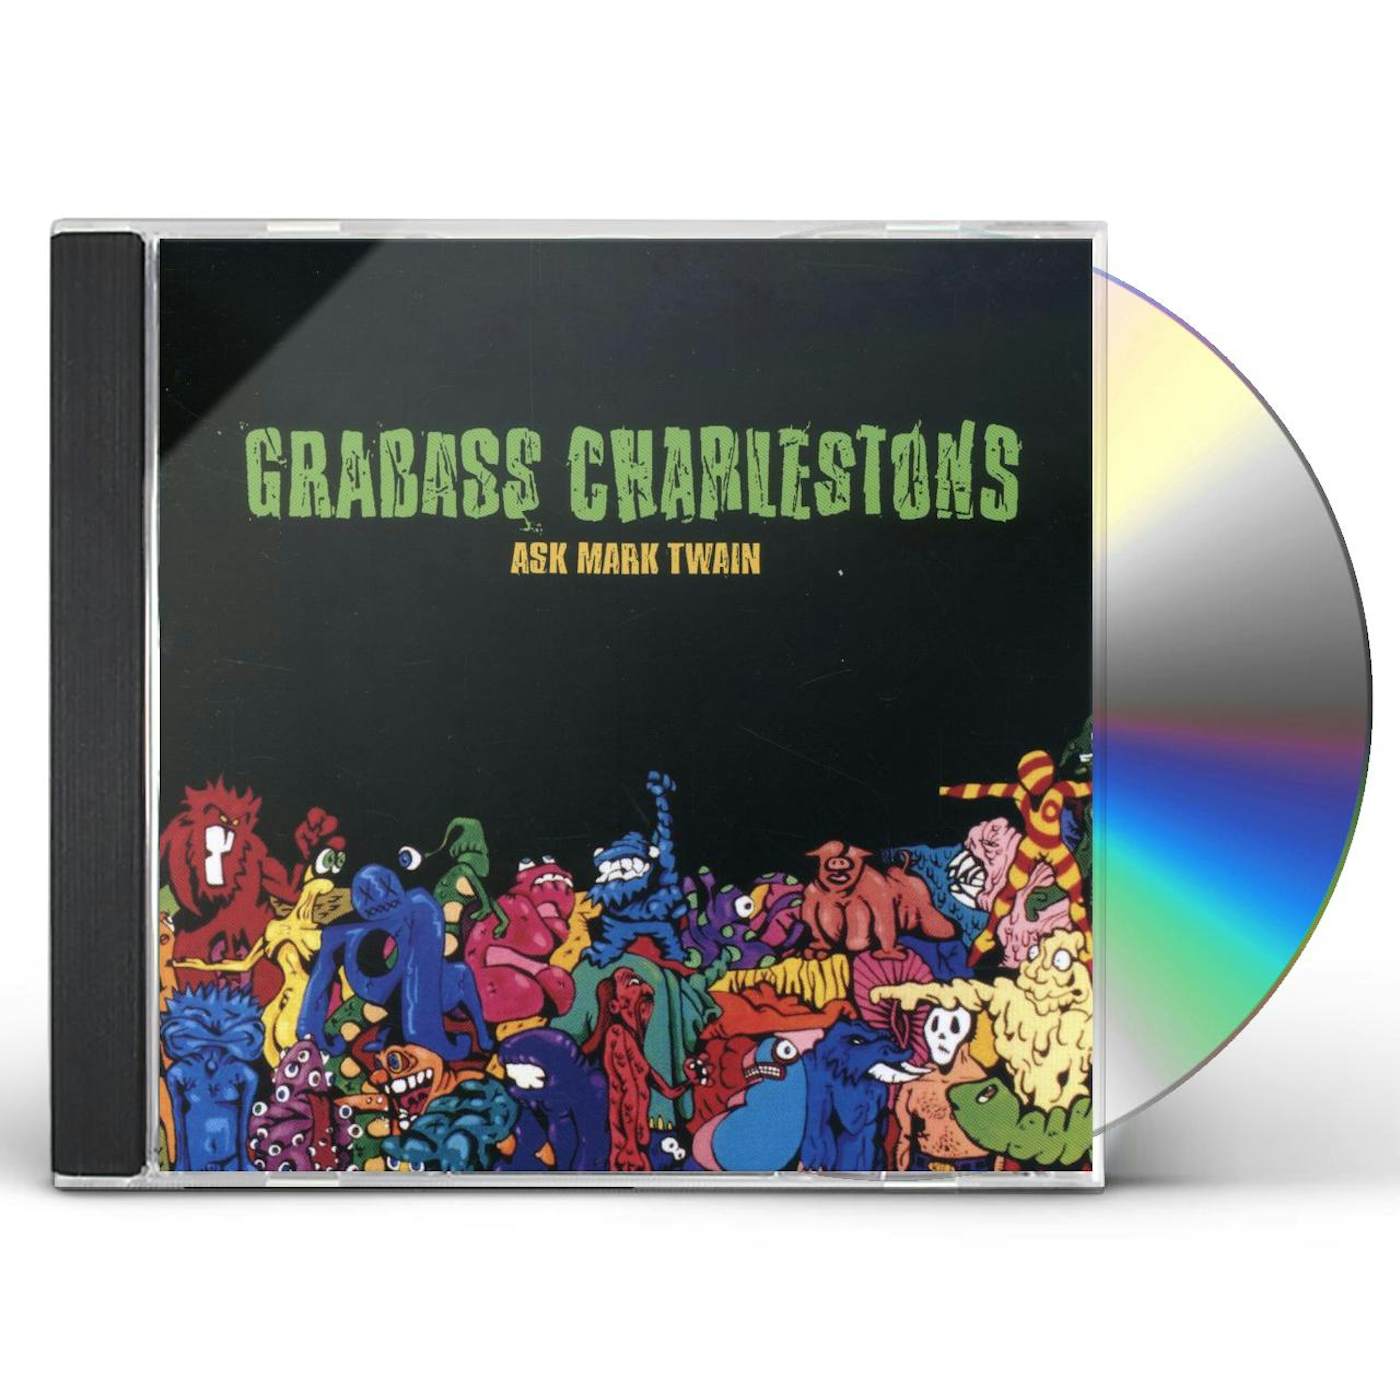 Grabass Charlestons ASK MARK TWAIN CD